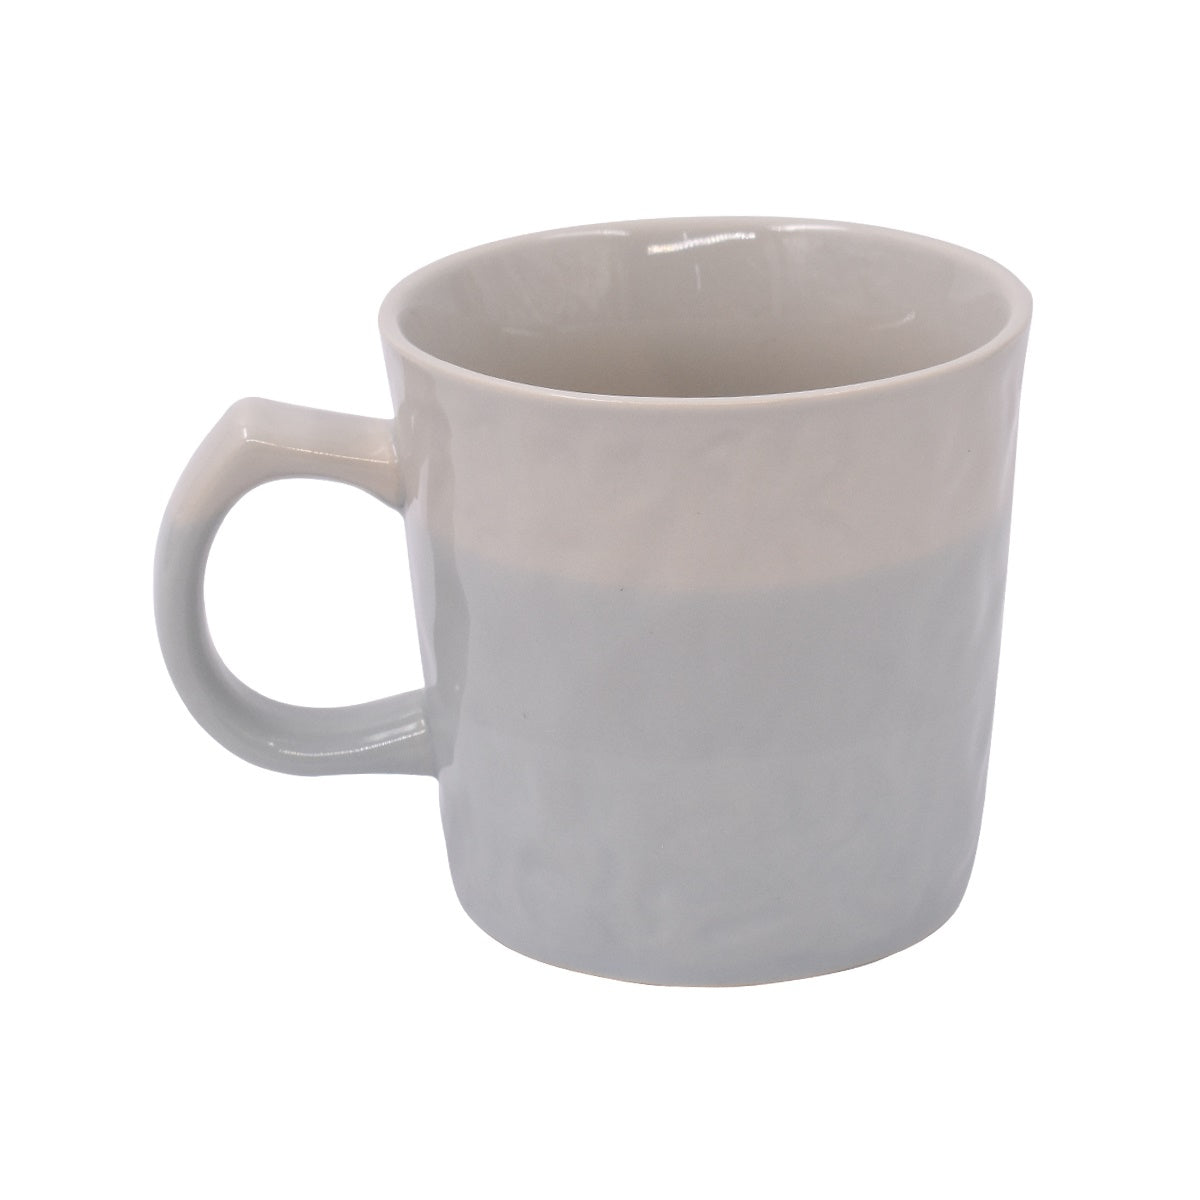 Ceramic Coffee or Tea Mug with Handle - 250ml (1394-1-B)